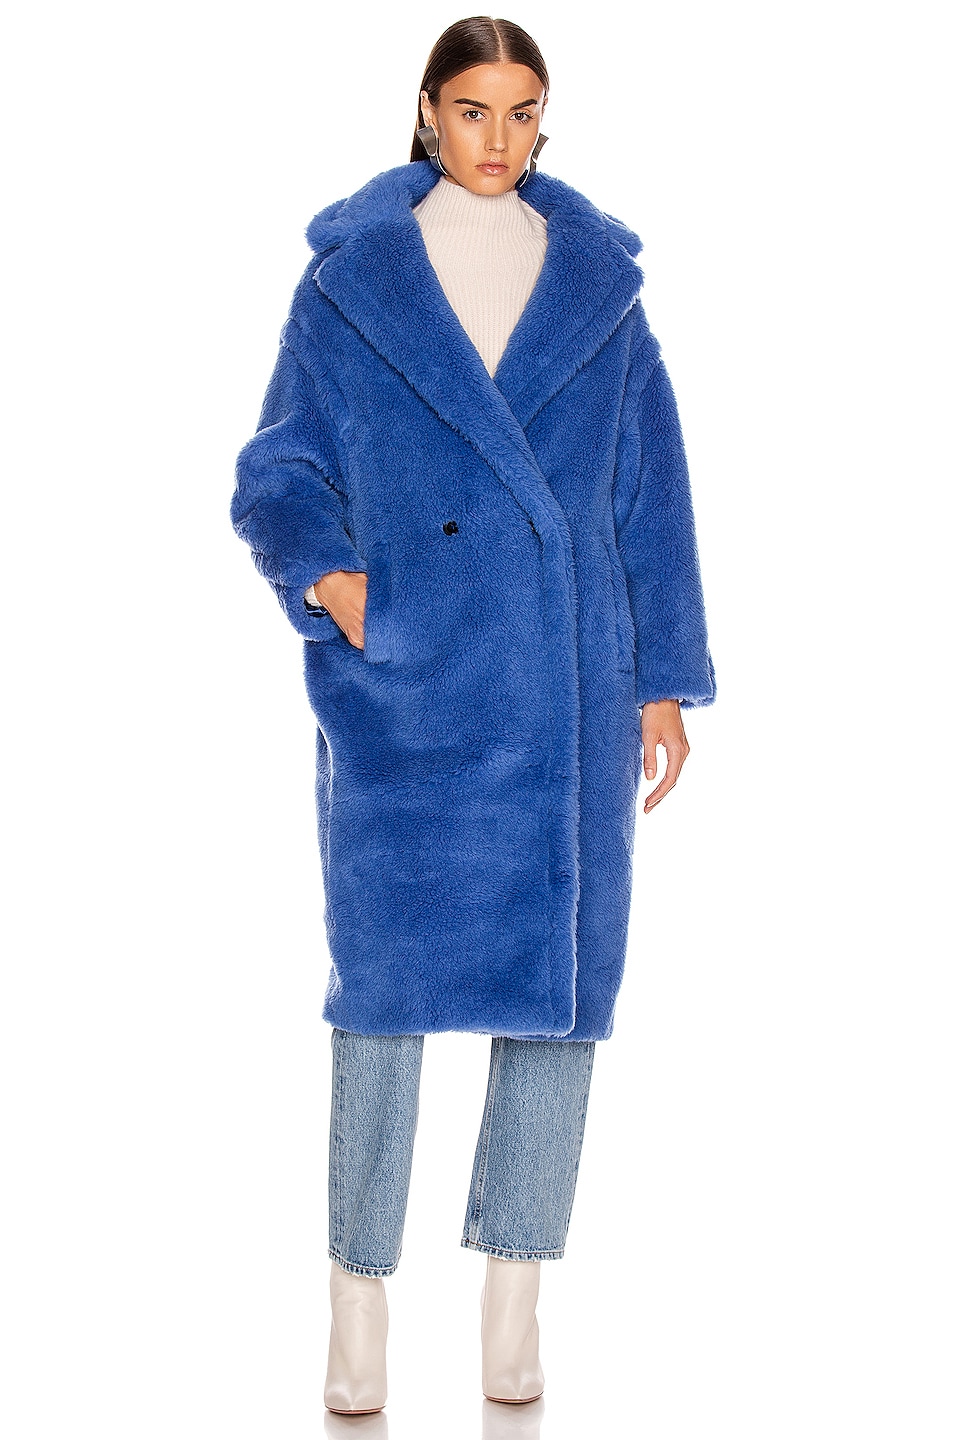 Max Mara Teddy Tedgirl Coat in Cornflower Blue | FWRD